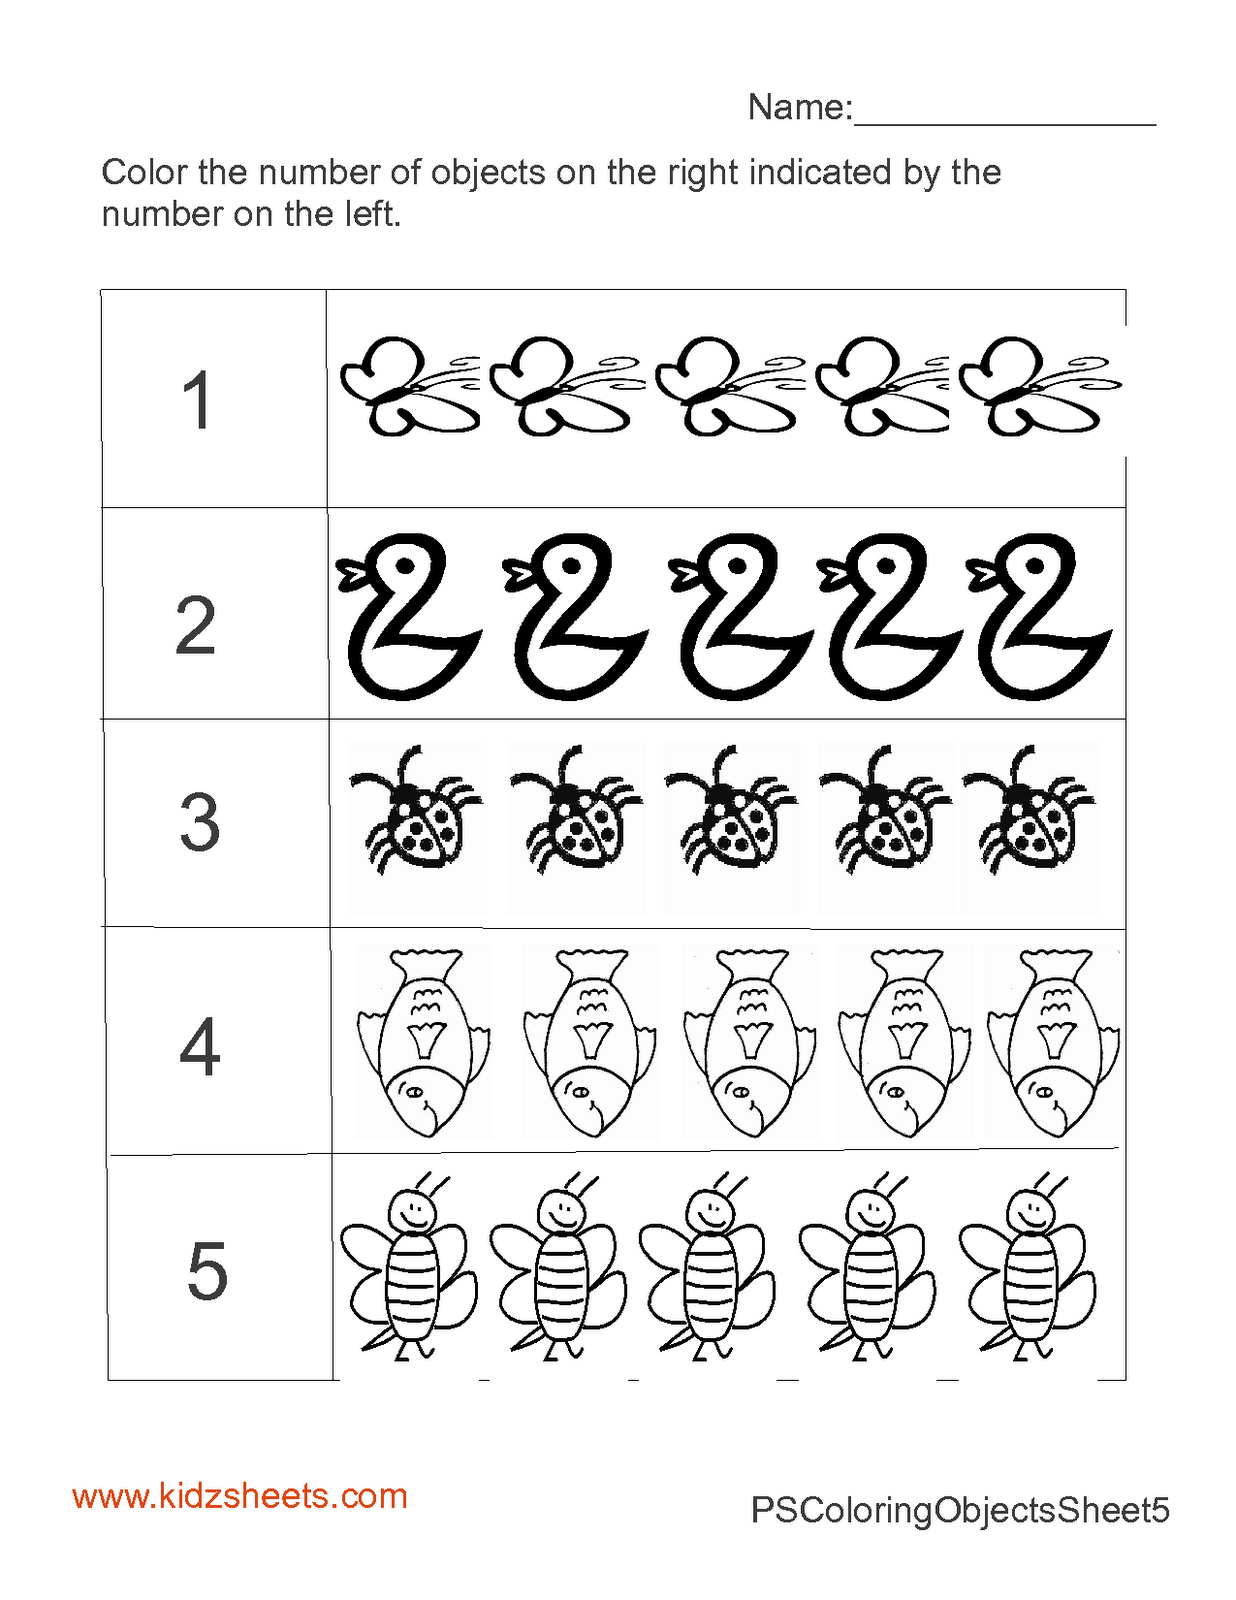 Kidz Worksheets: Preschool Count & Color Worksheet5